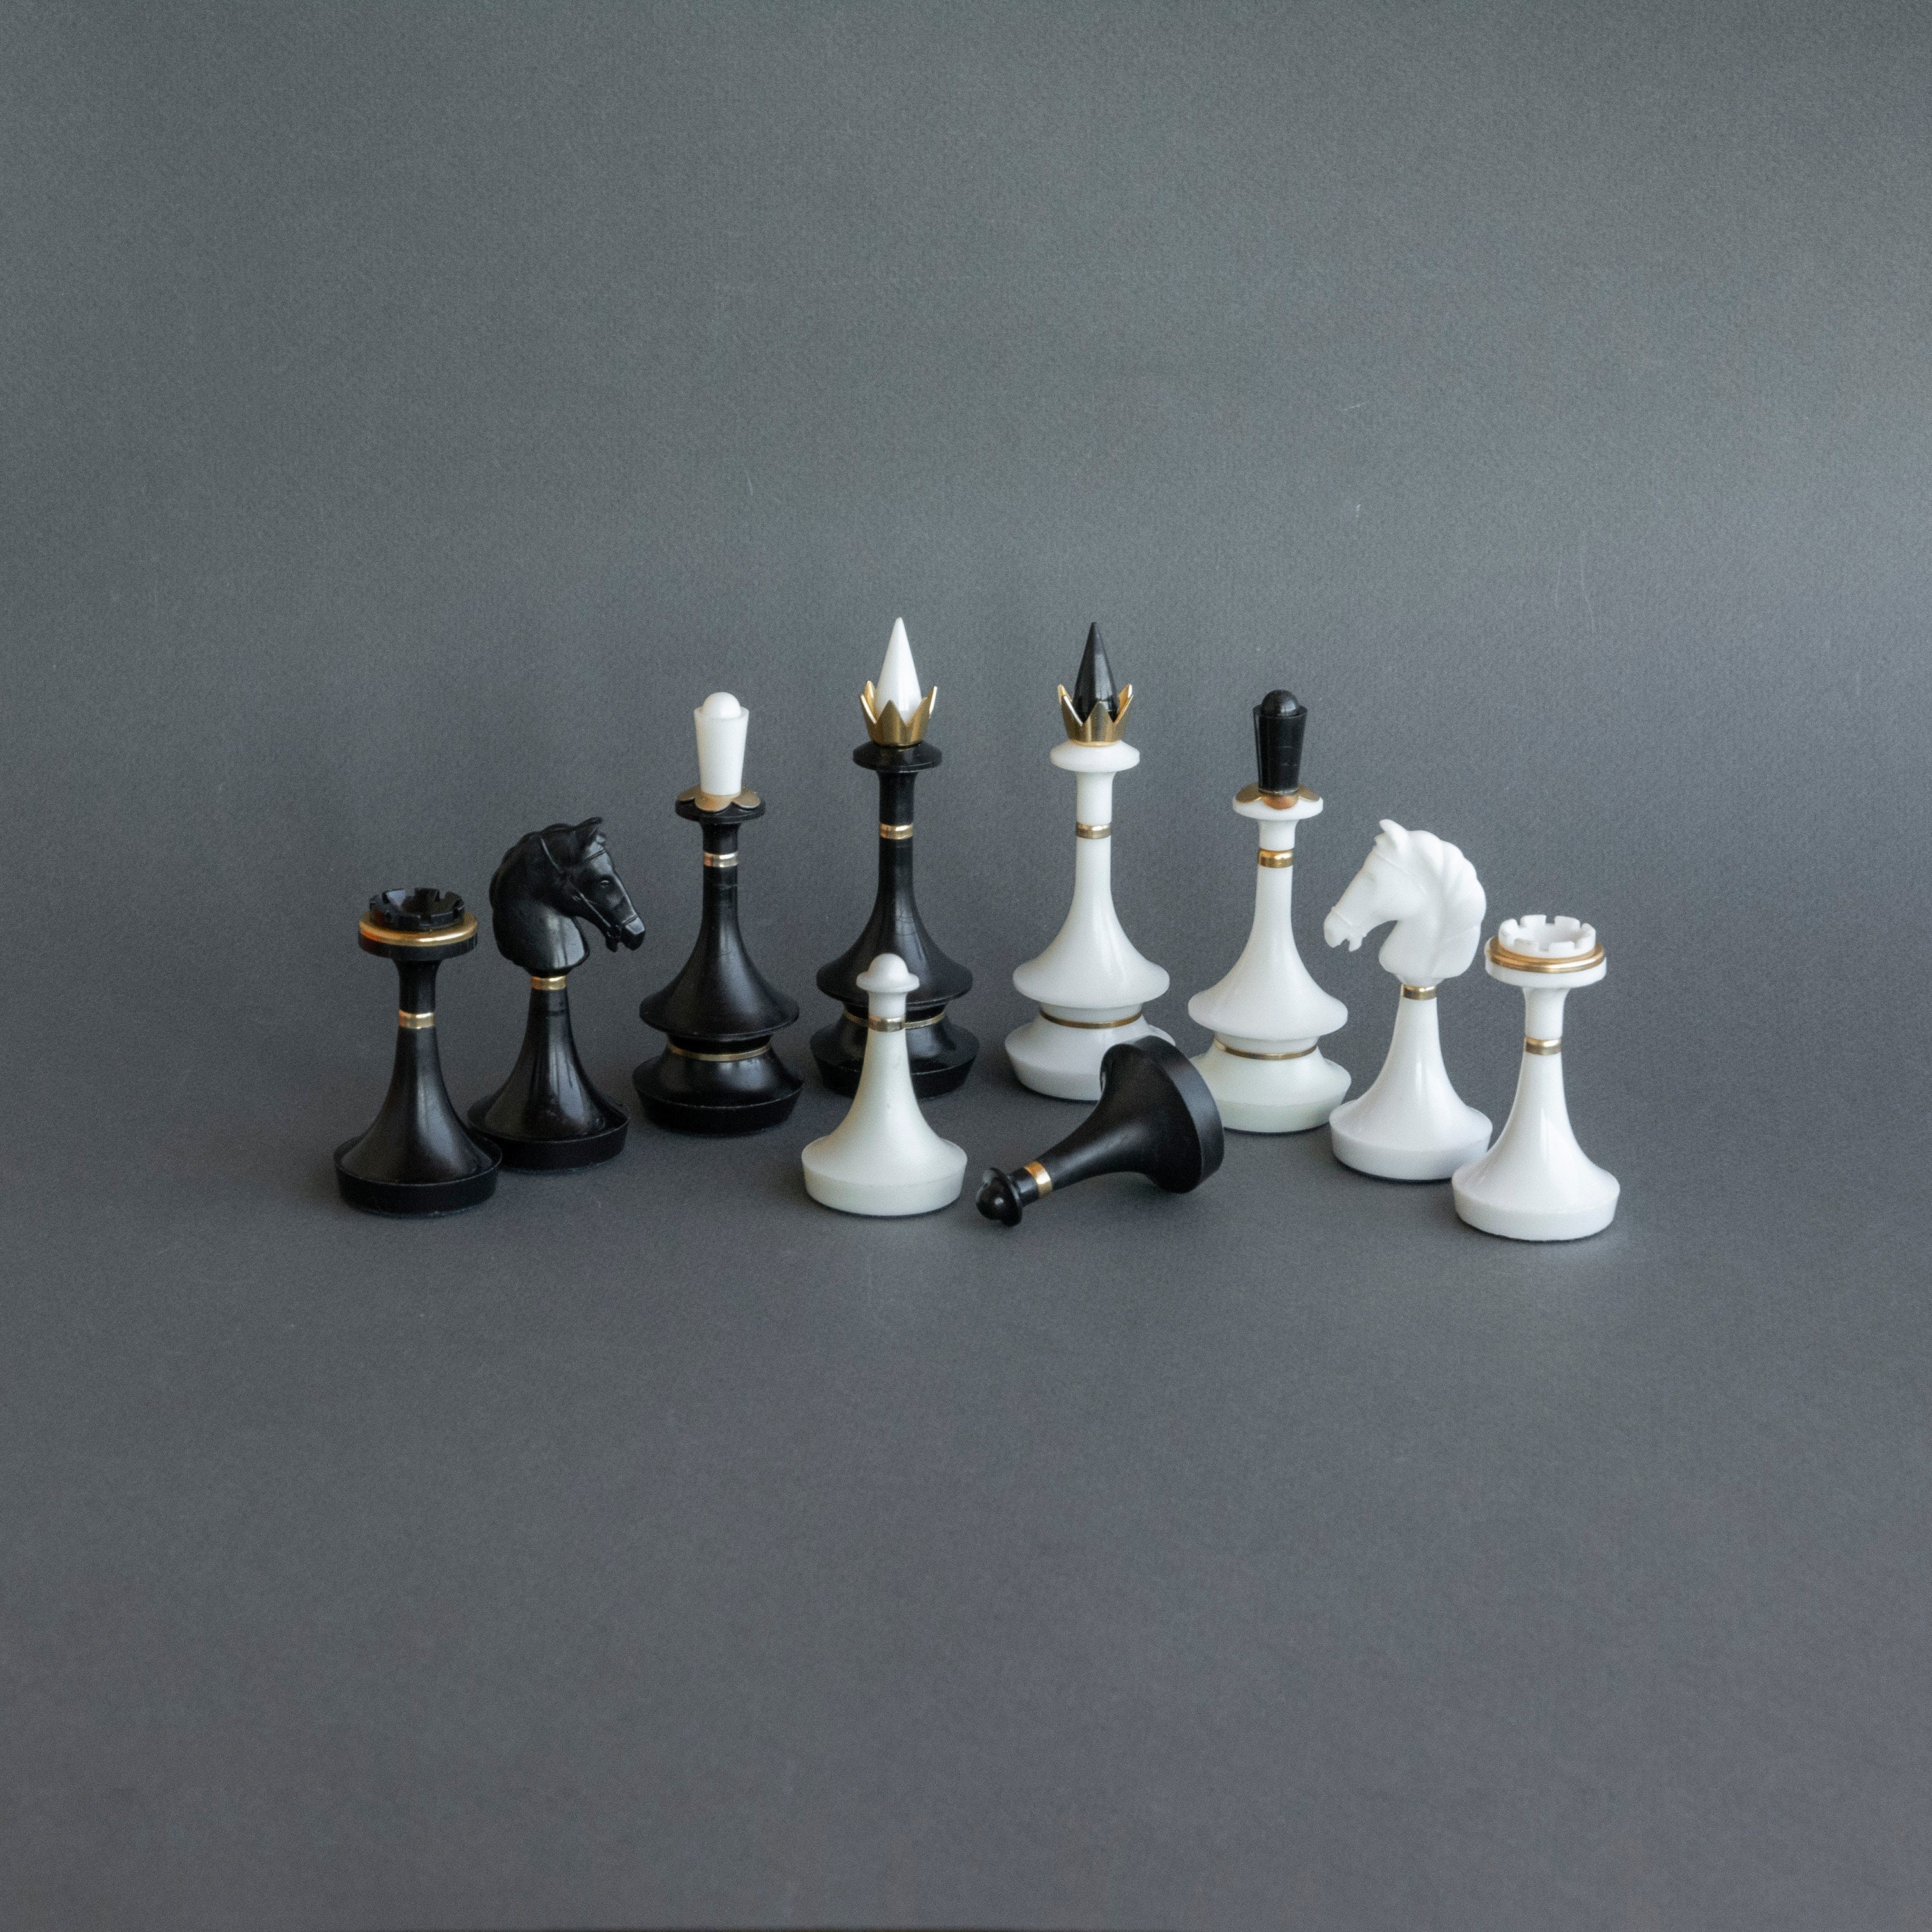 Plastic Chessmen Key Chains